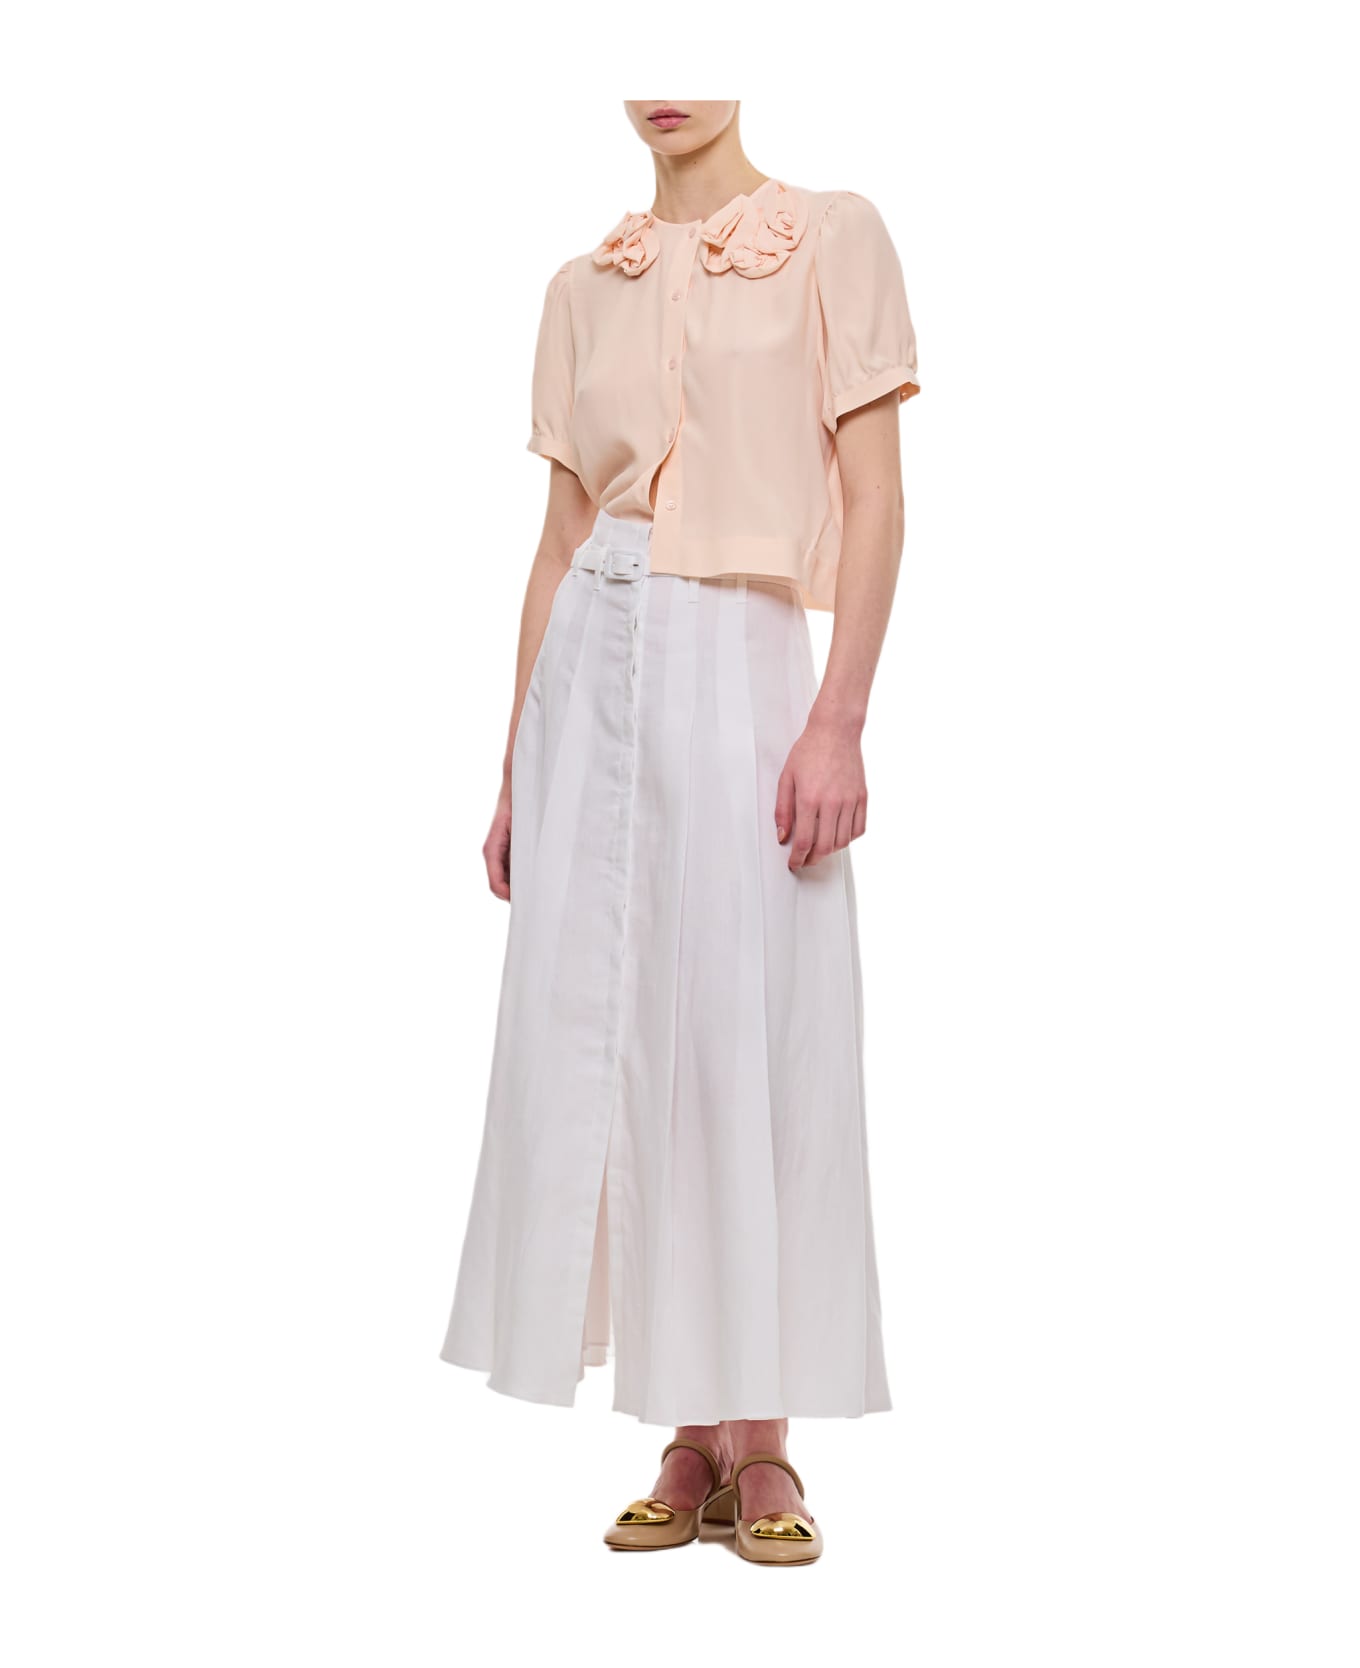 Simone Rocha Short Sleeve Top W/ Clustered Rose - Pink スカート